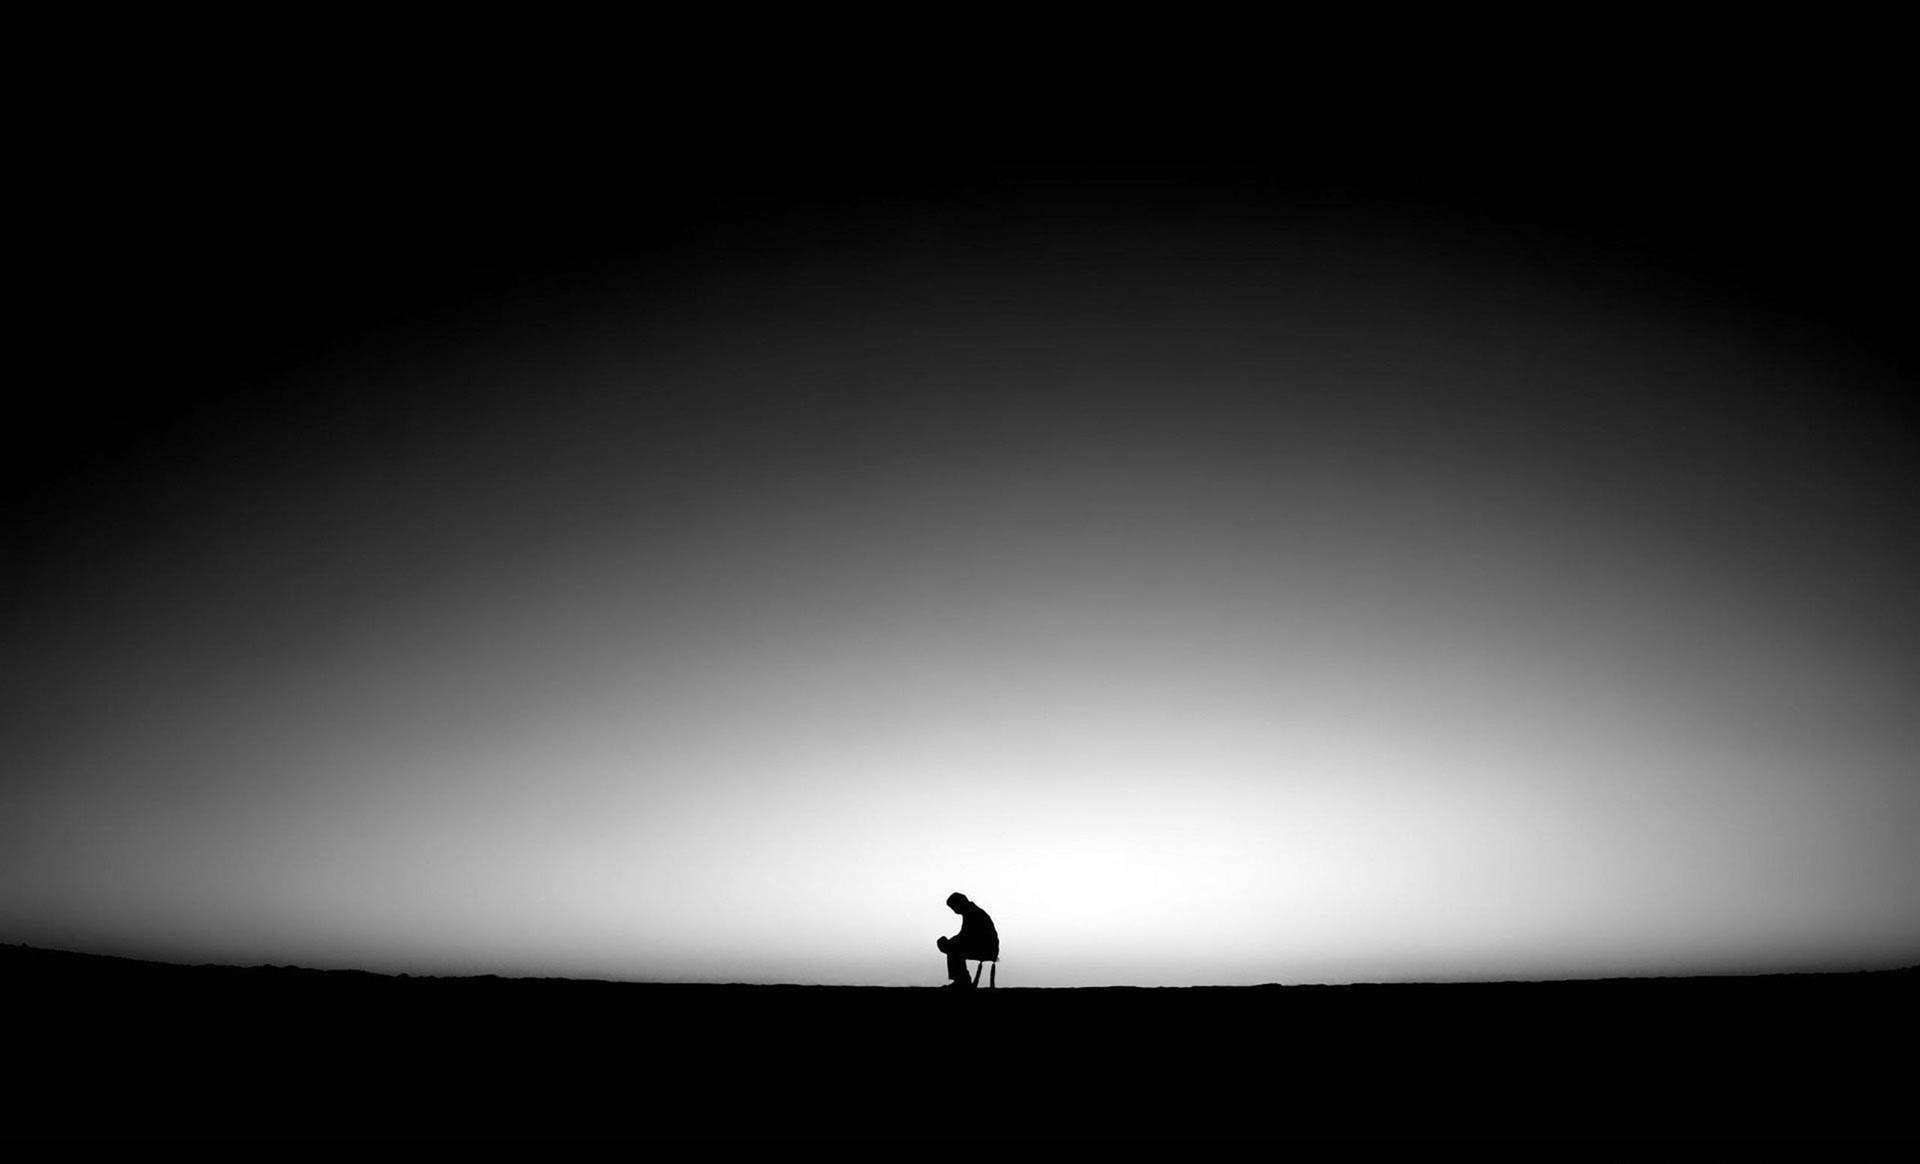 Sad Aesthetic Alone In Dark Silhouette